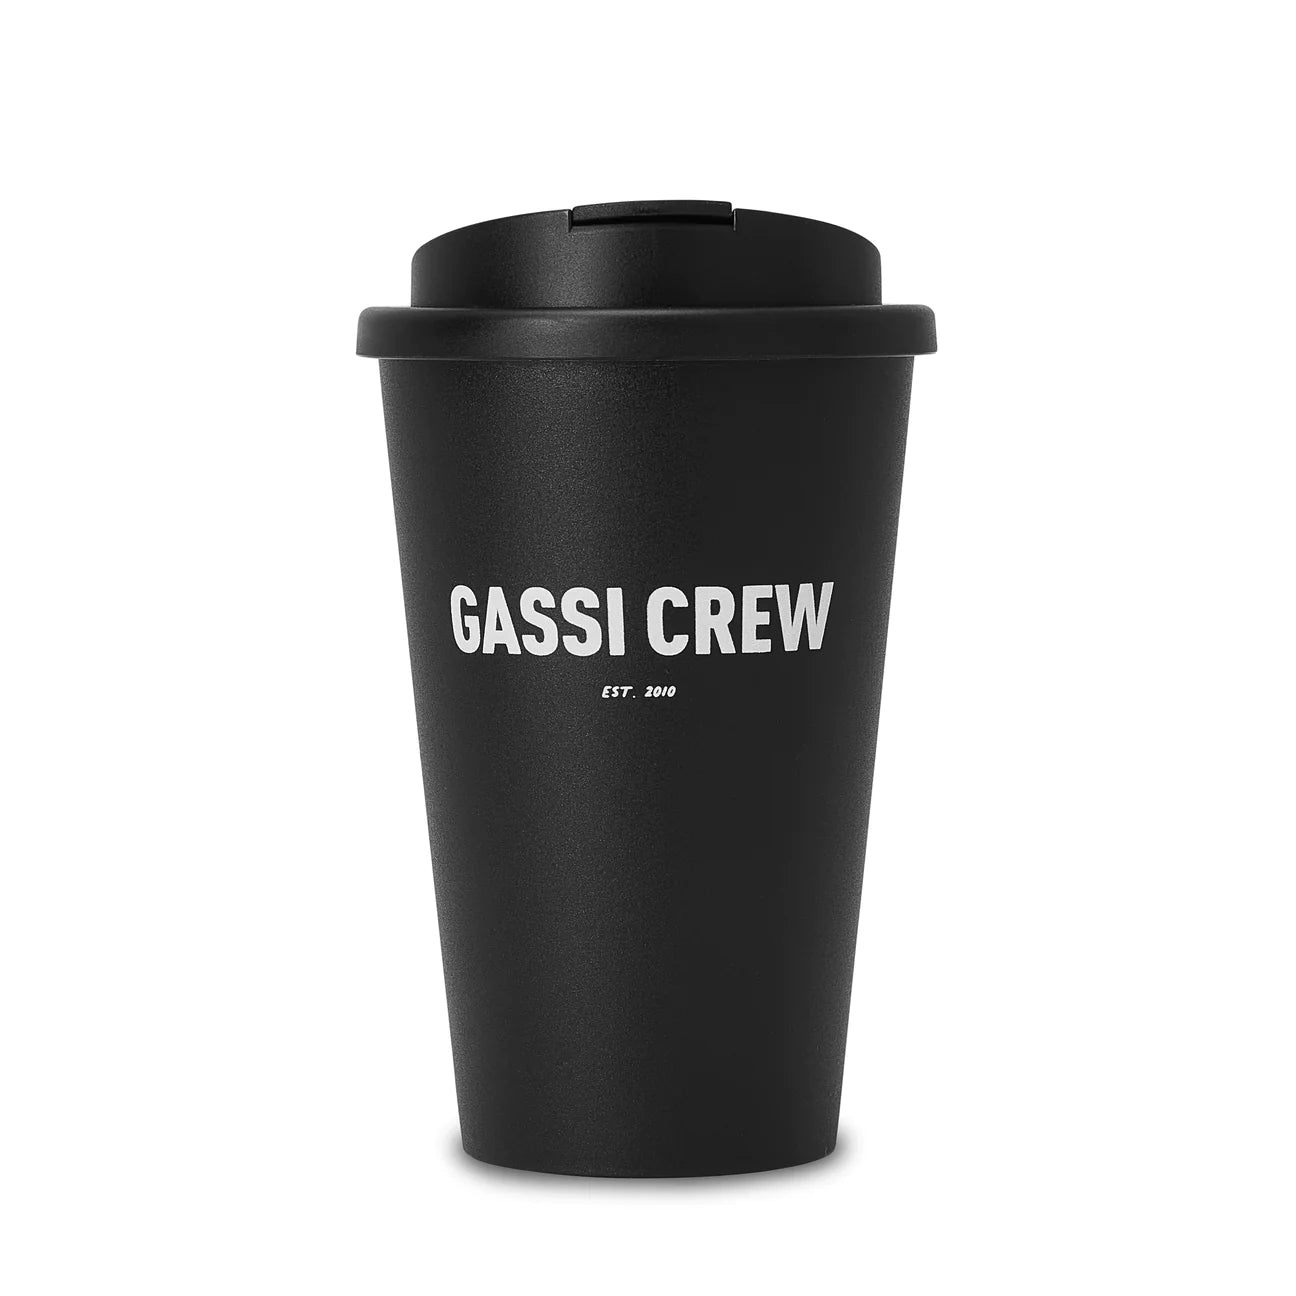 Gassi Crew TO GO mug